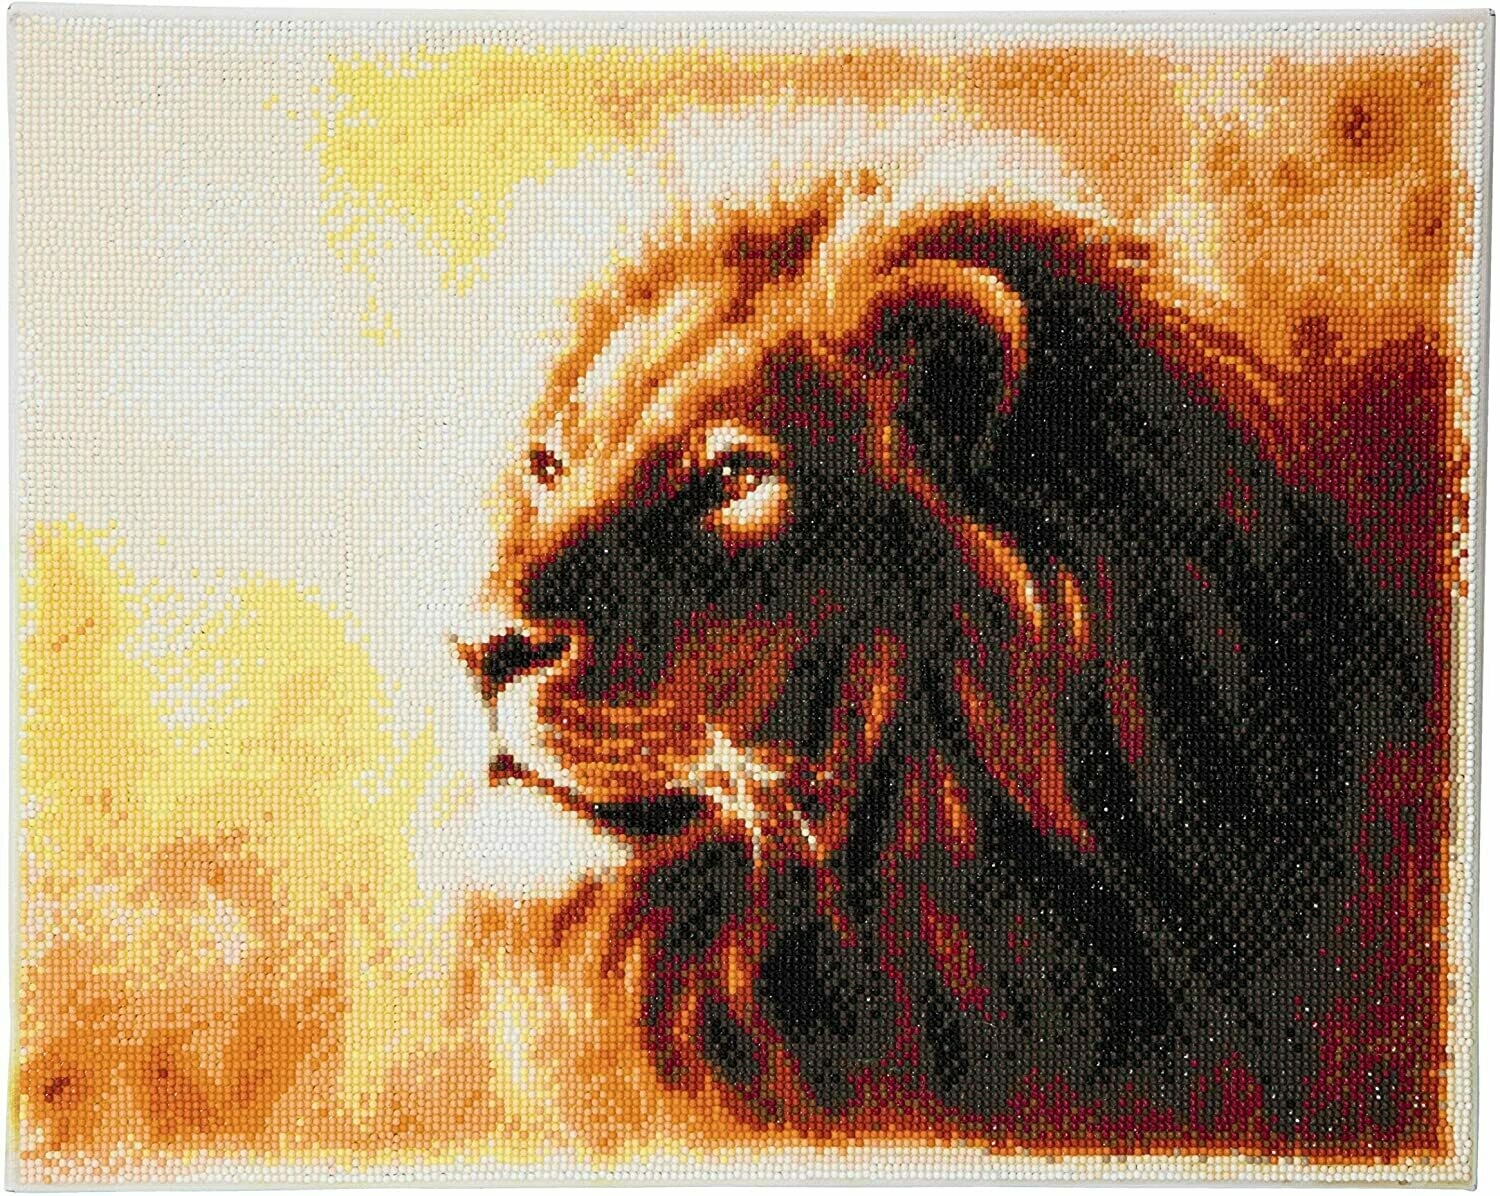 Crystal Art le fier lion